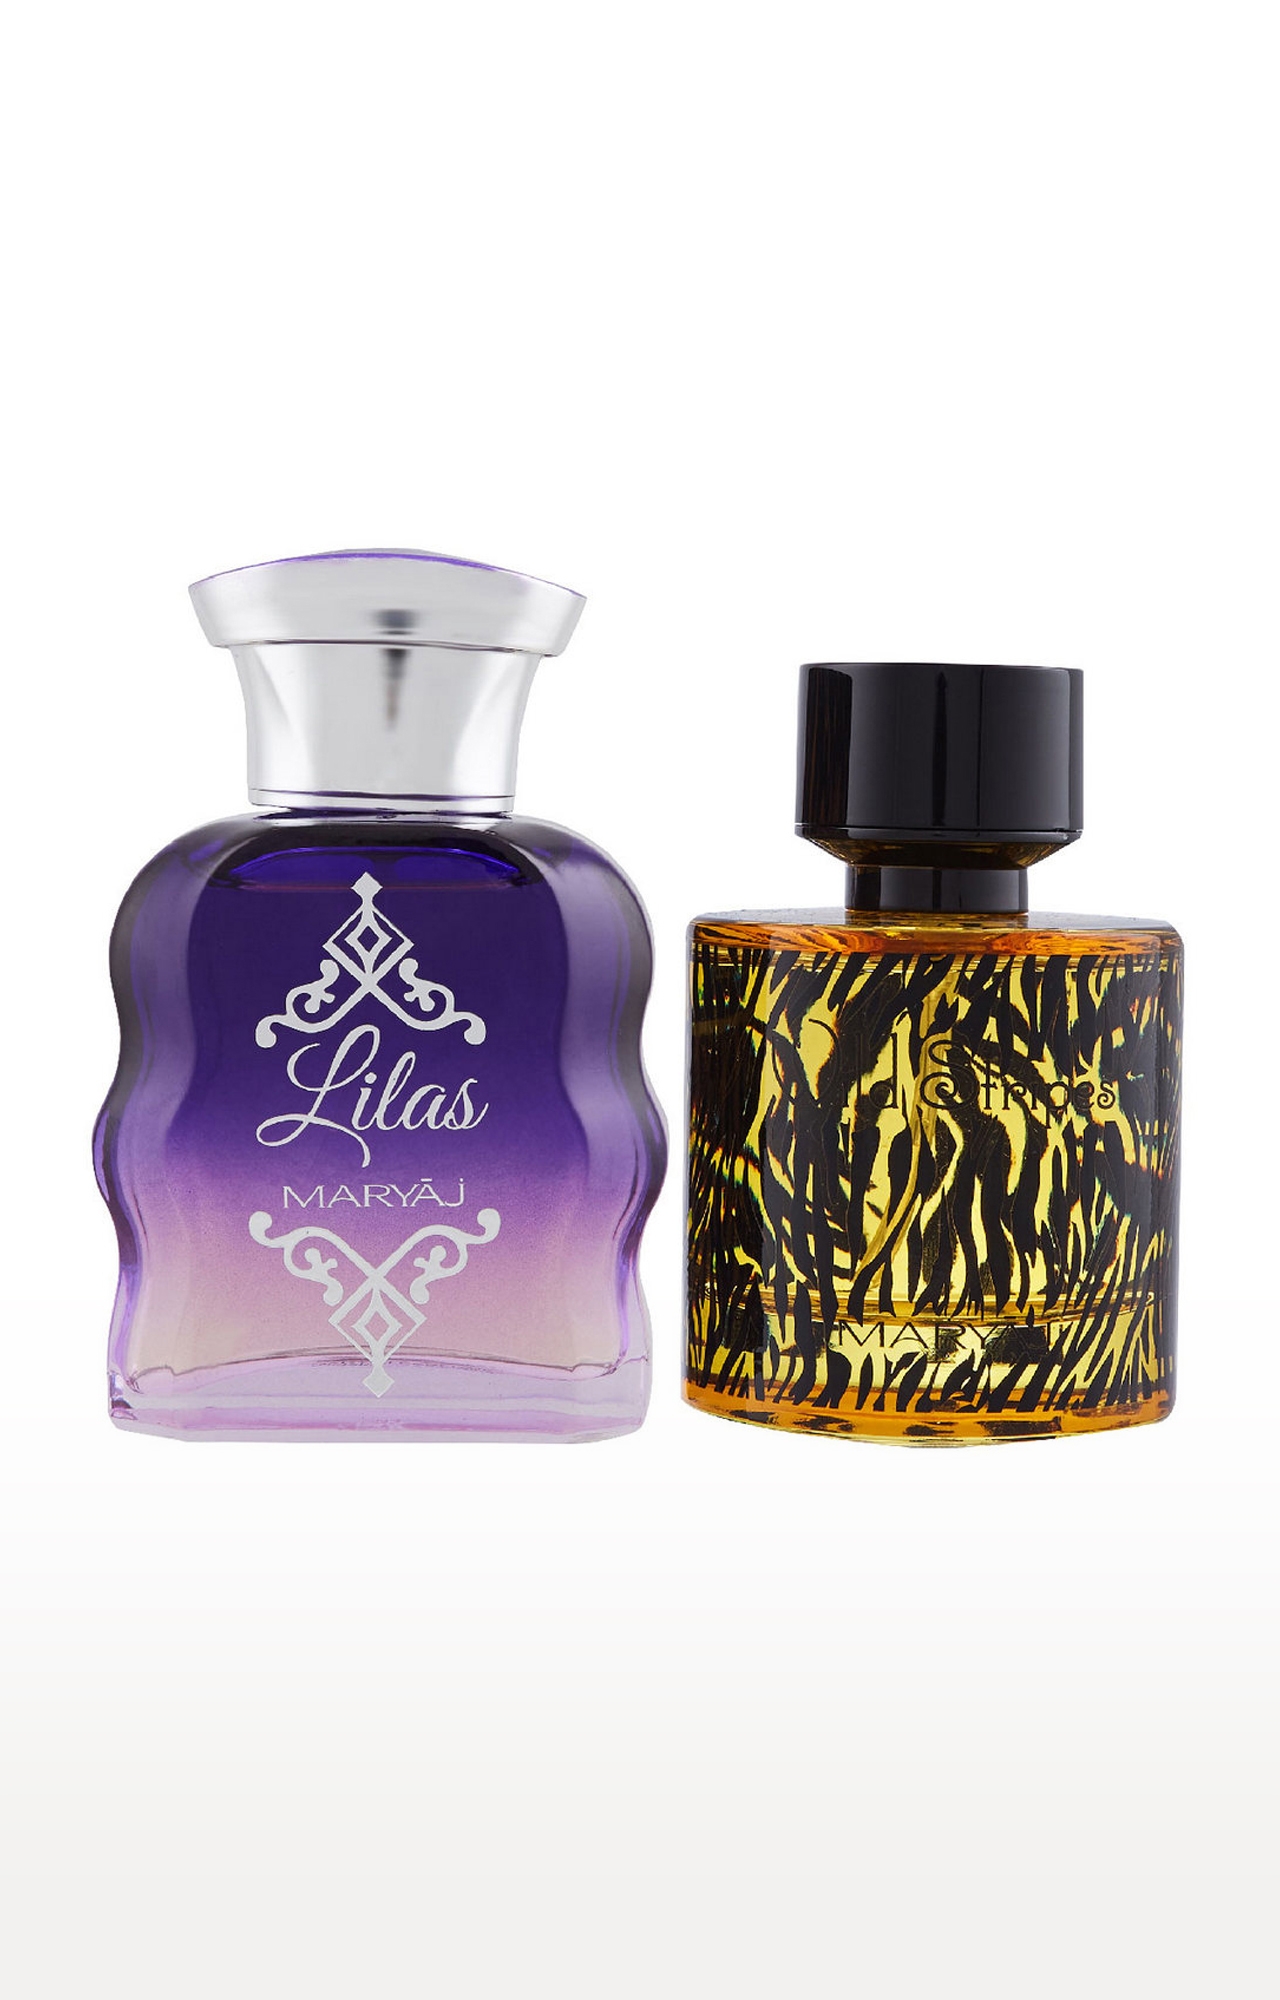 Maryaj Lilas Eau De Parfum Perfume 100ml for Women and Maryaj Wild Stripes Eau De Parfum Oriental Perfume 100ml for Men